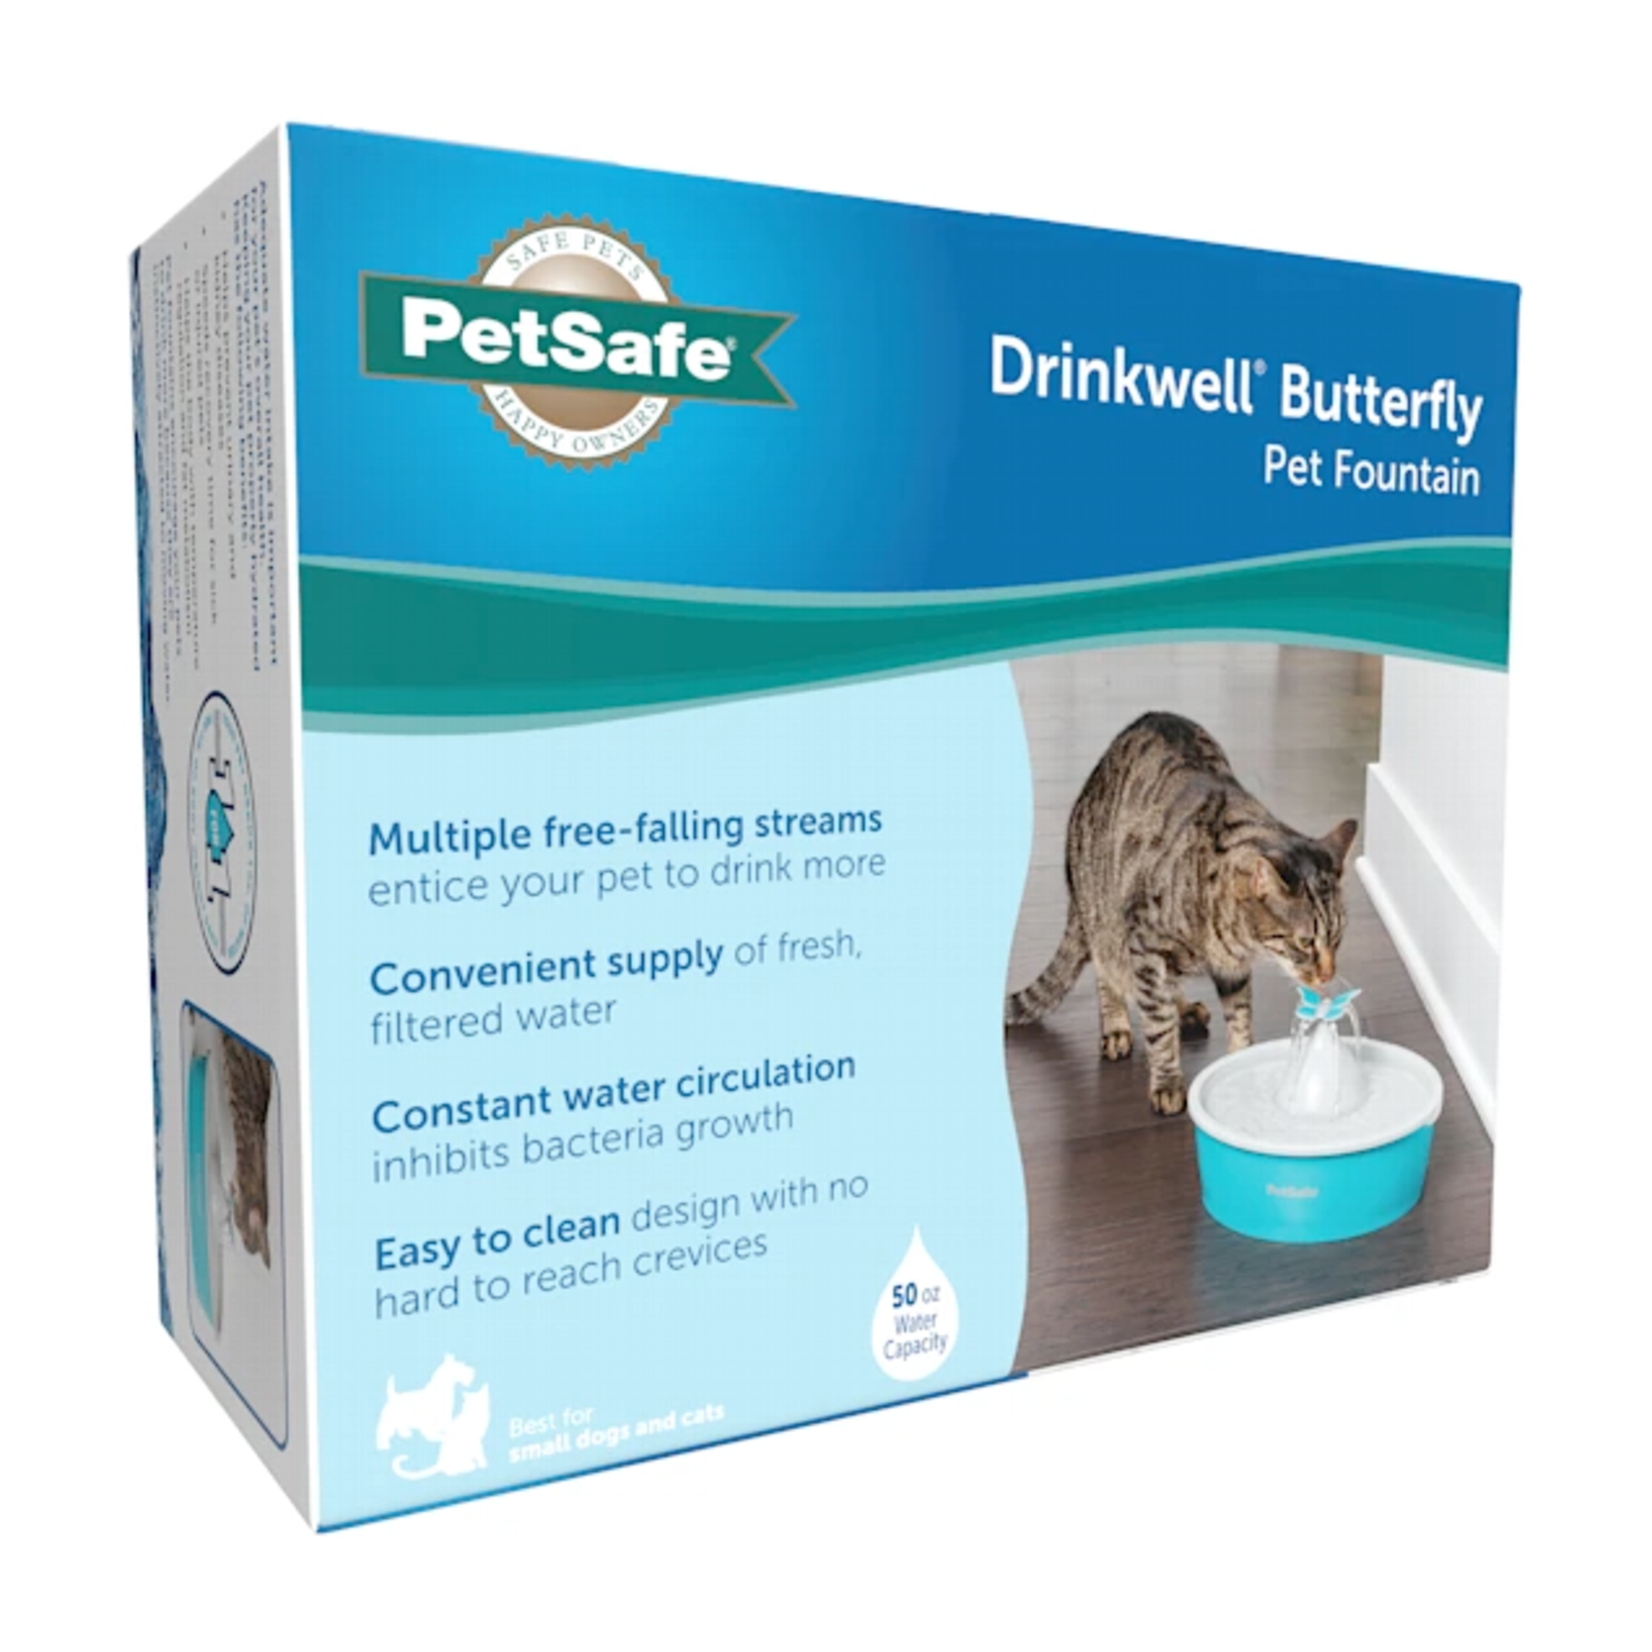 PetSafe PetSafe Drinkwell Butterfly Pet Fountain 50oz